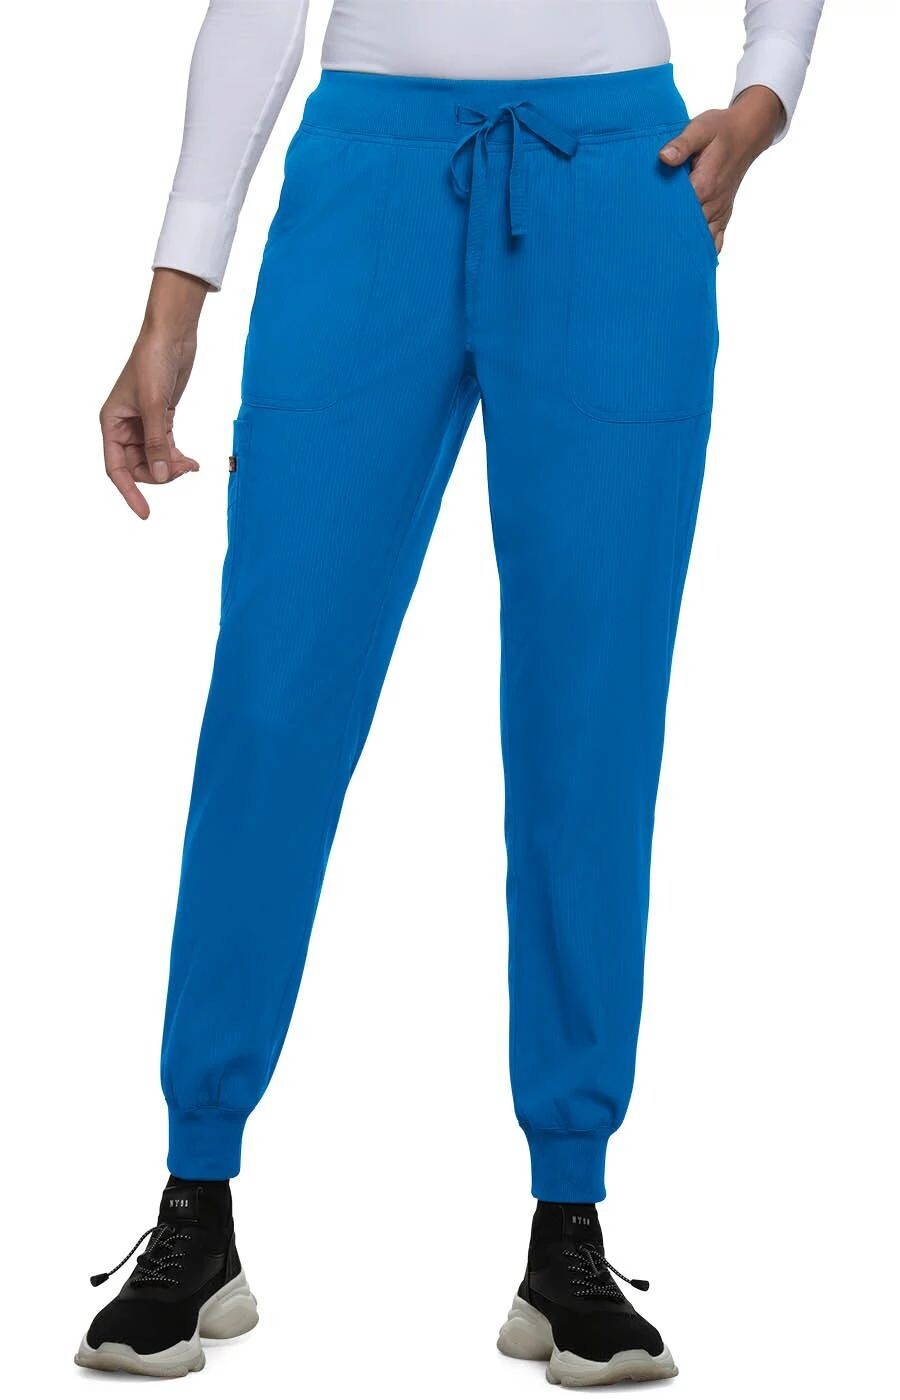 Pantalone KOI LITE FIERCE JOGGER Donna Colore 20. Royal Blue